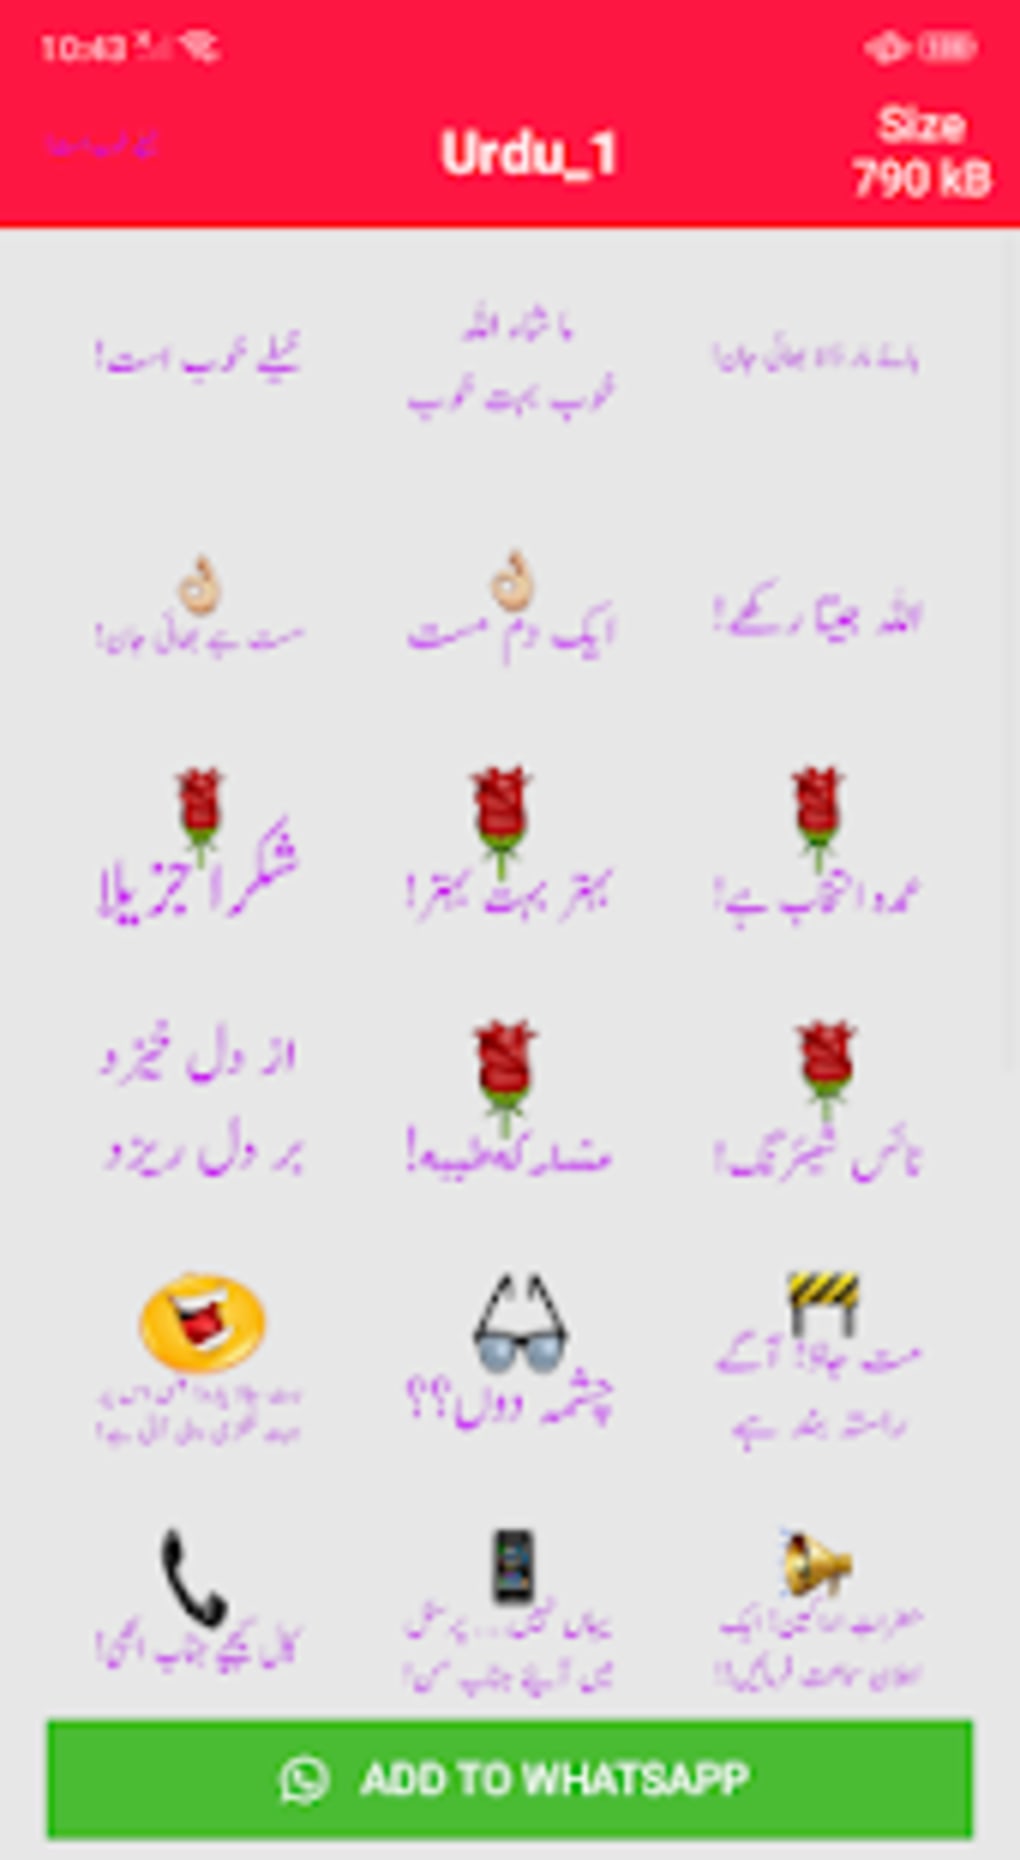 Whatsapp stickers in urdu Main Image